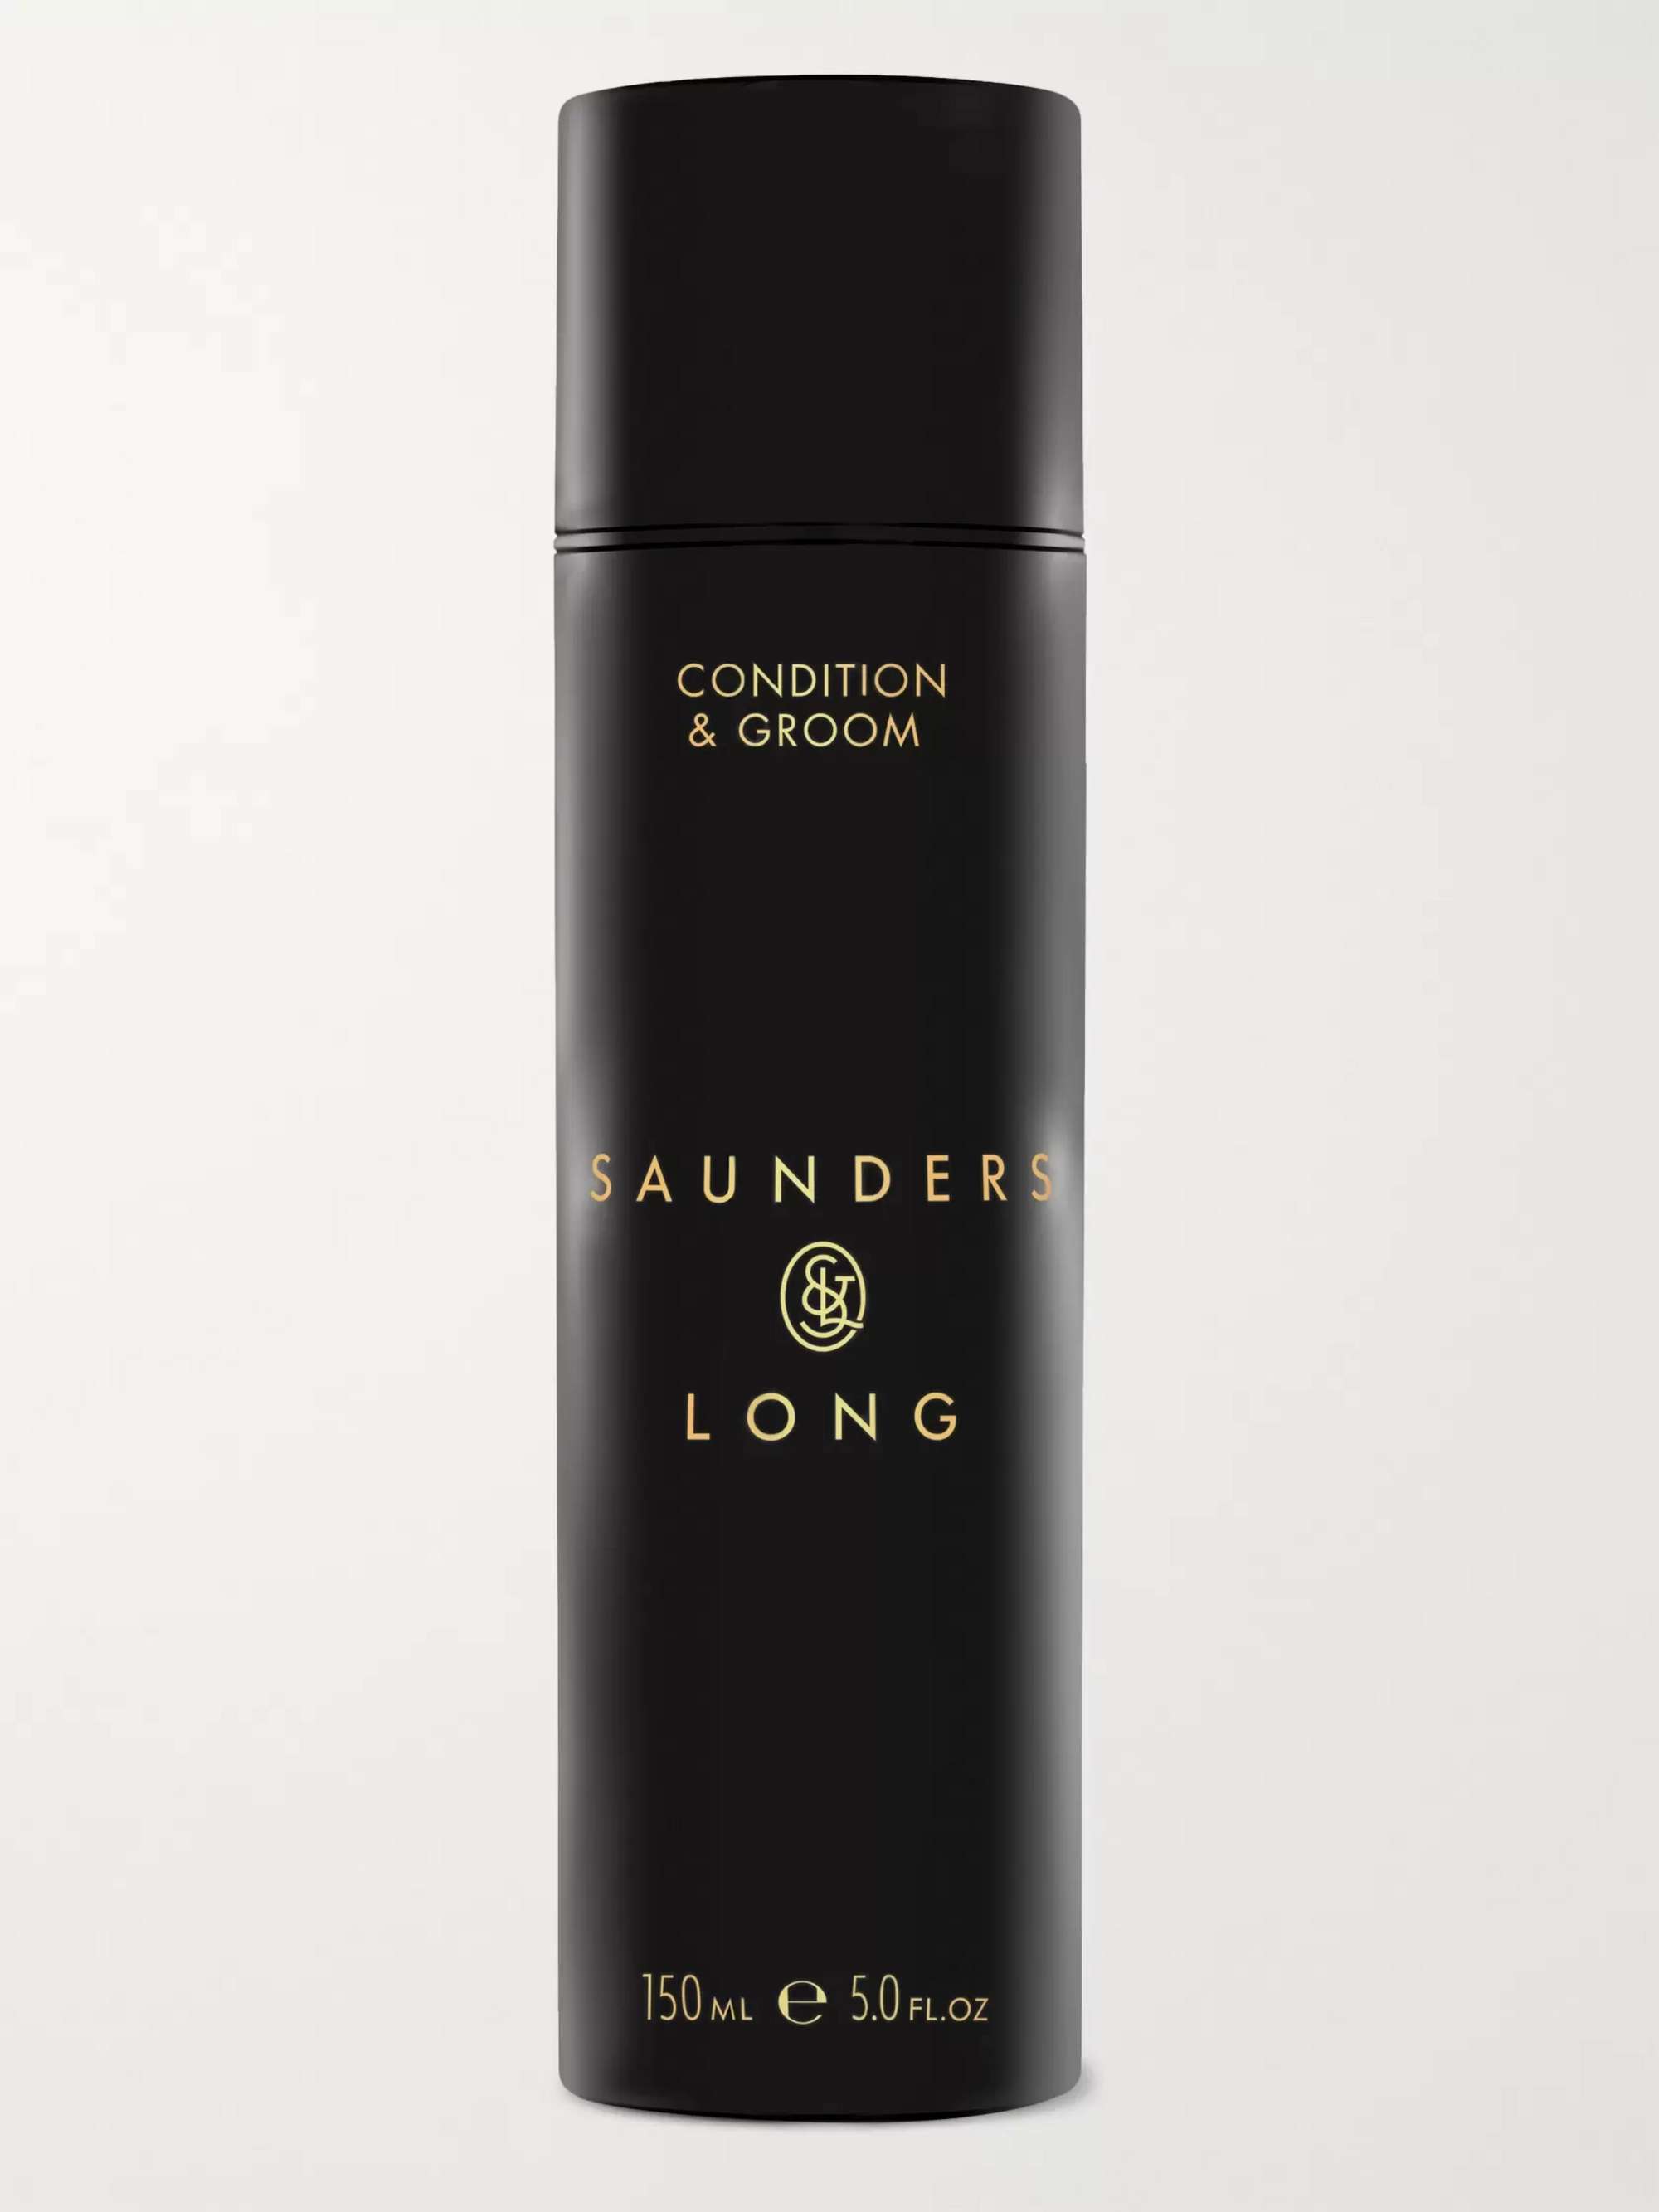 SAUNDERS & LONG Condition & Groom, 150ml